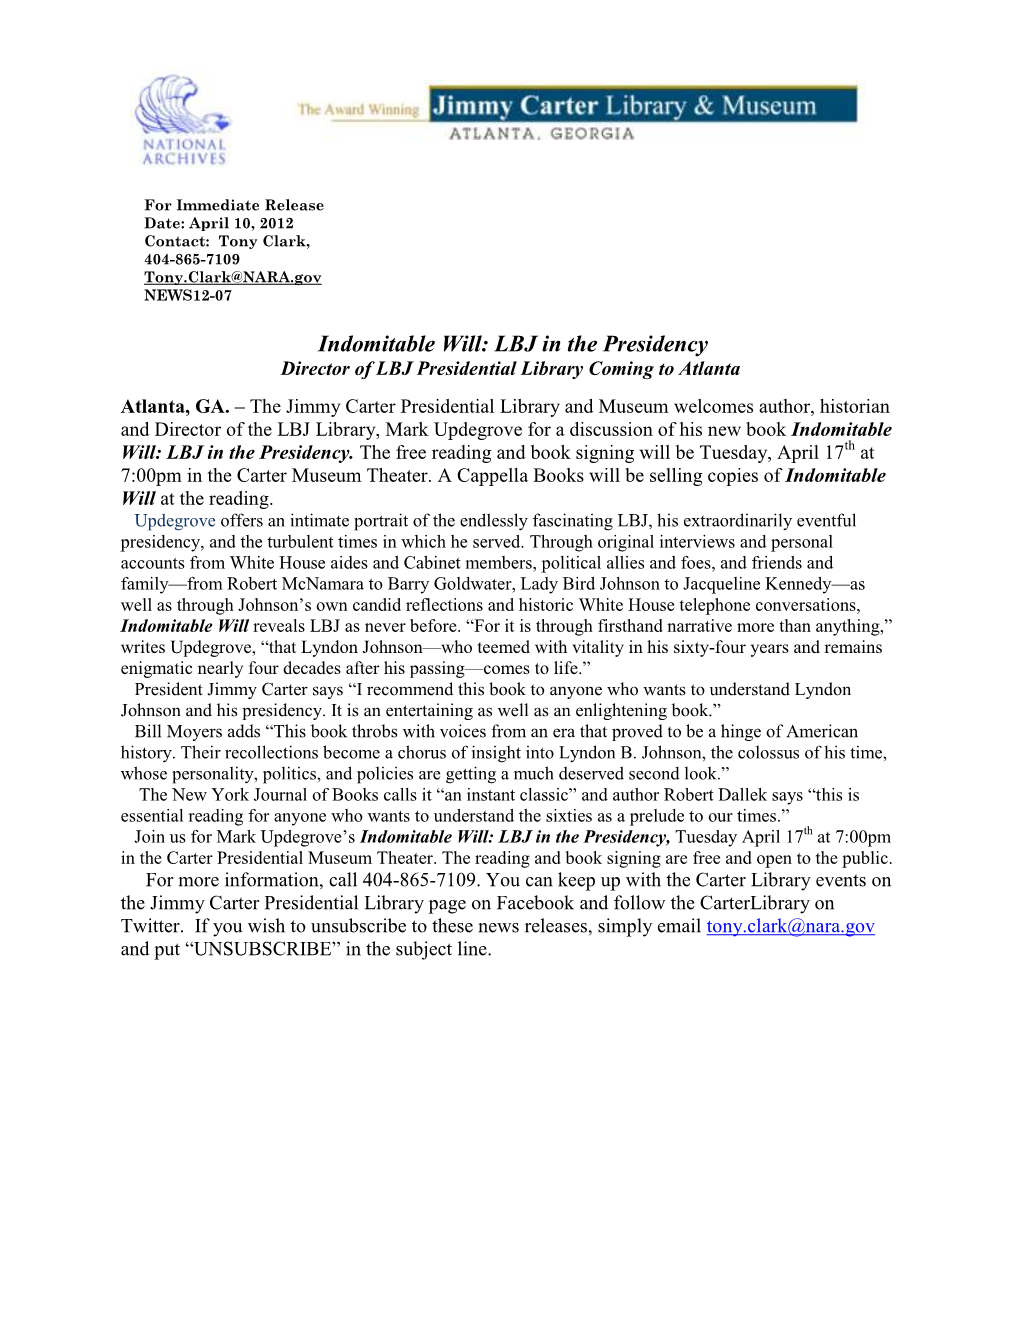 Indomitable Will: LBJ in the Presidency Director of LBJ Presidential Library Coming to Atlanta